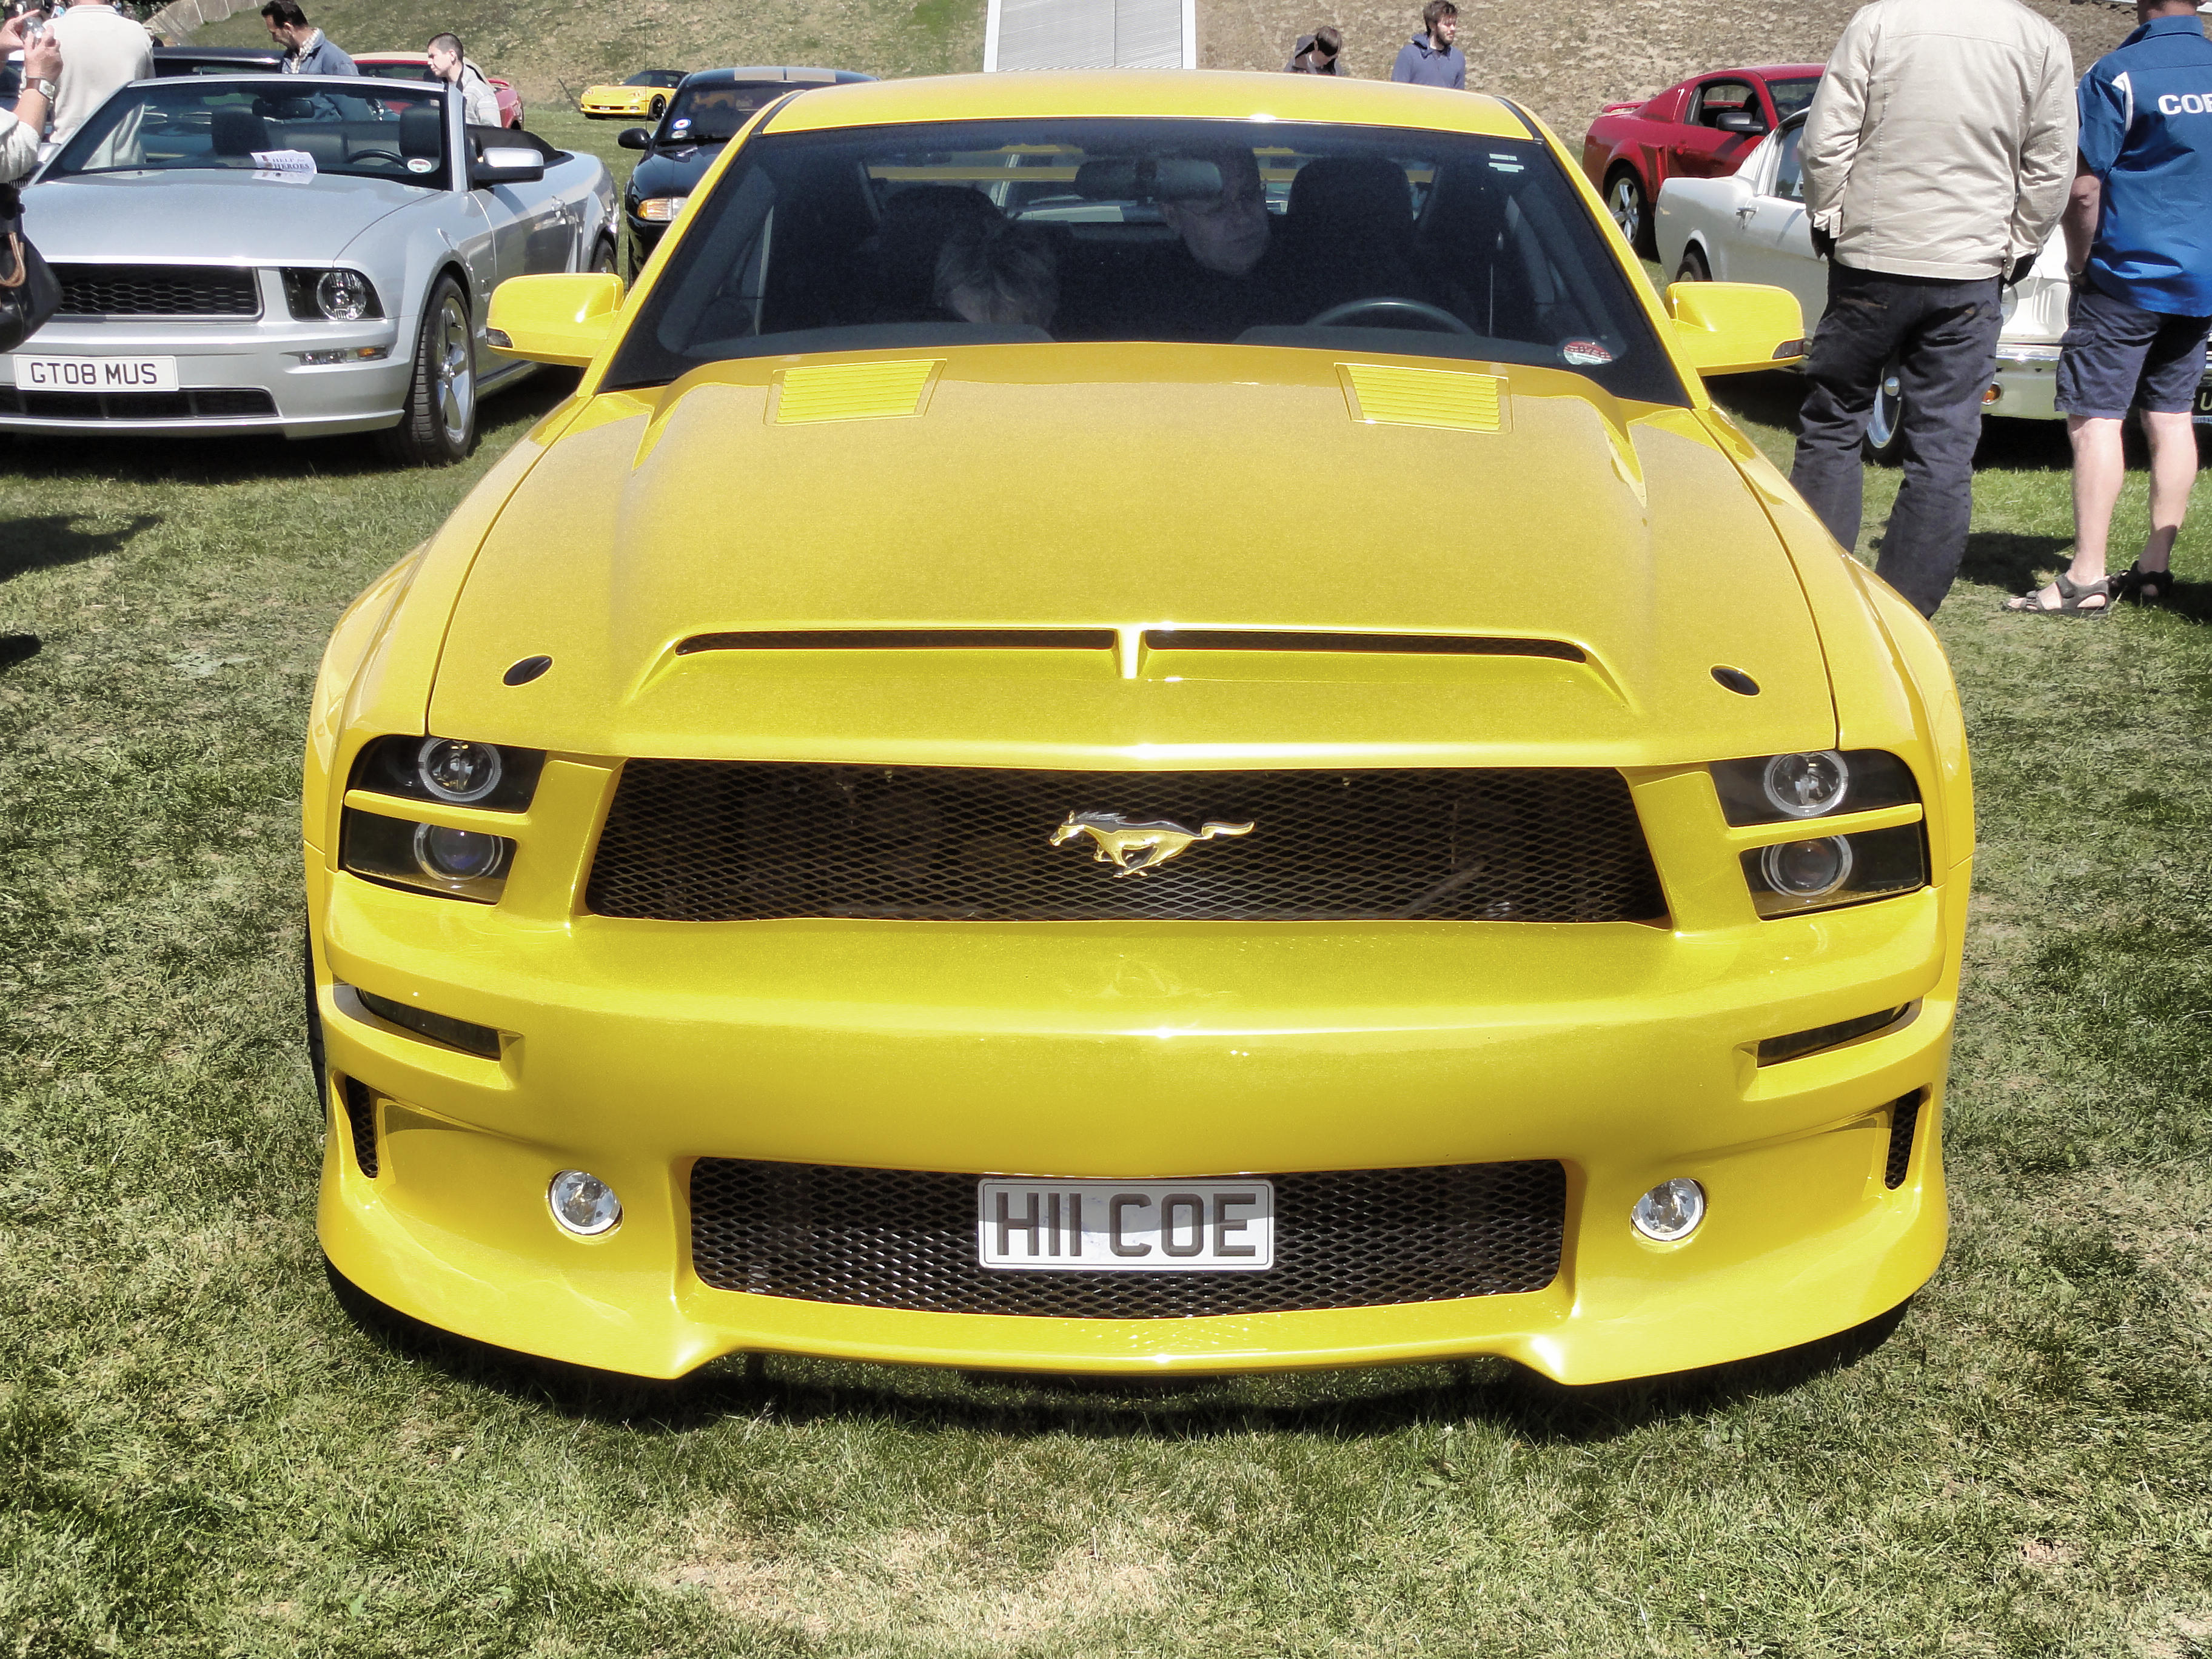 Ford Mustang | Flickr - Photo Sharing!